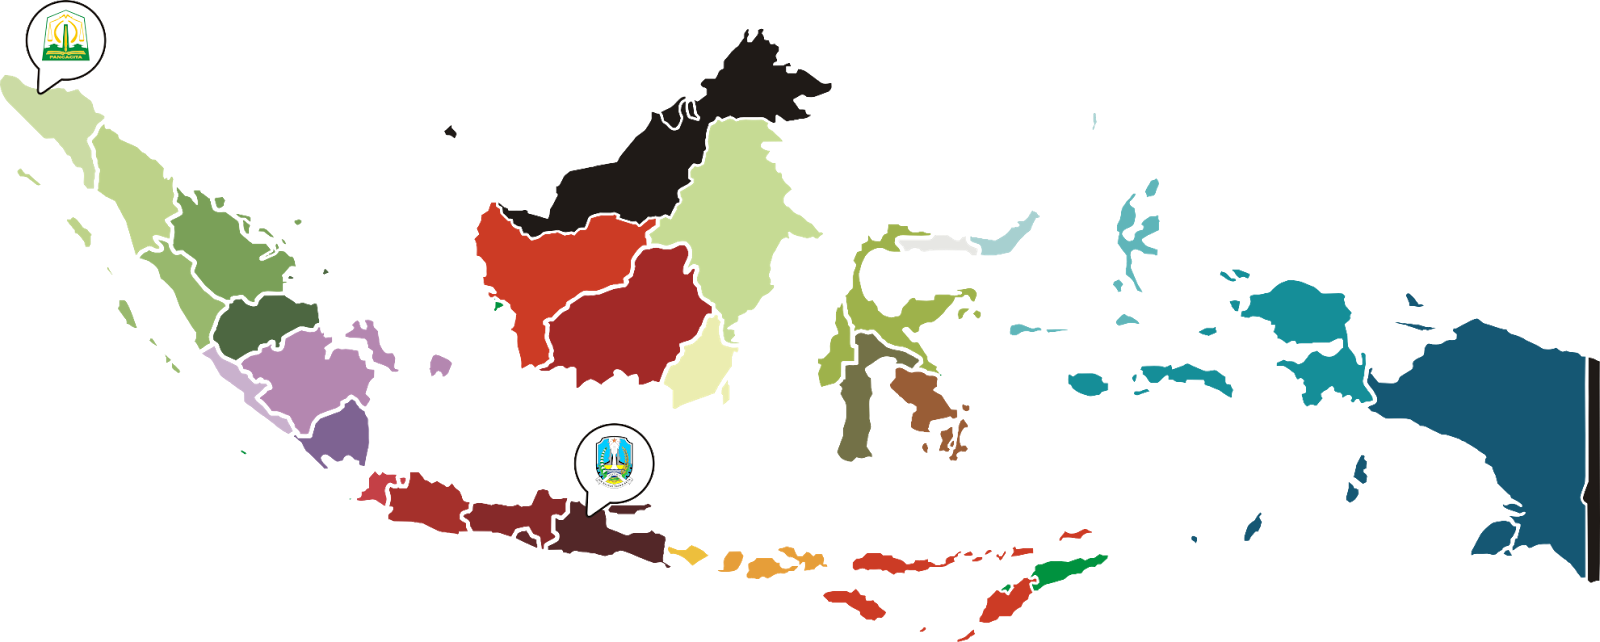 Peta Indonesia Vector Digopm